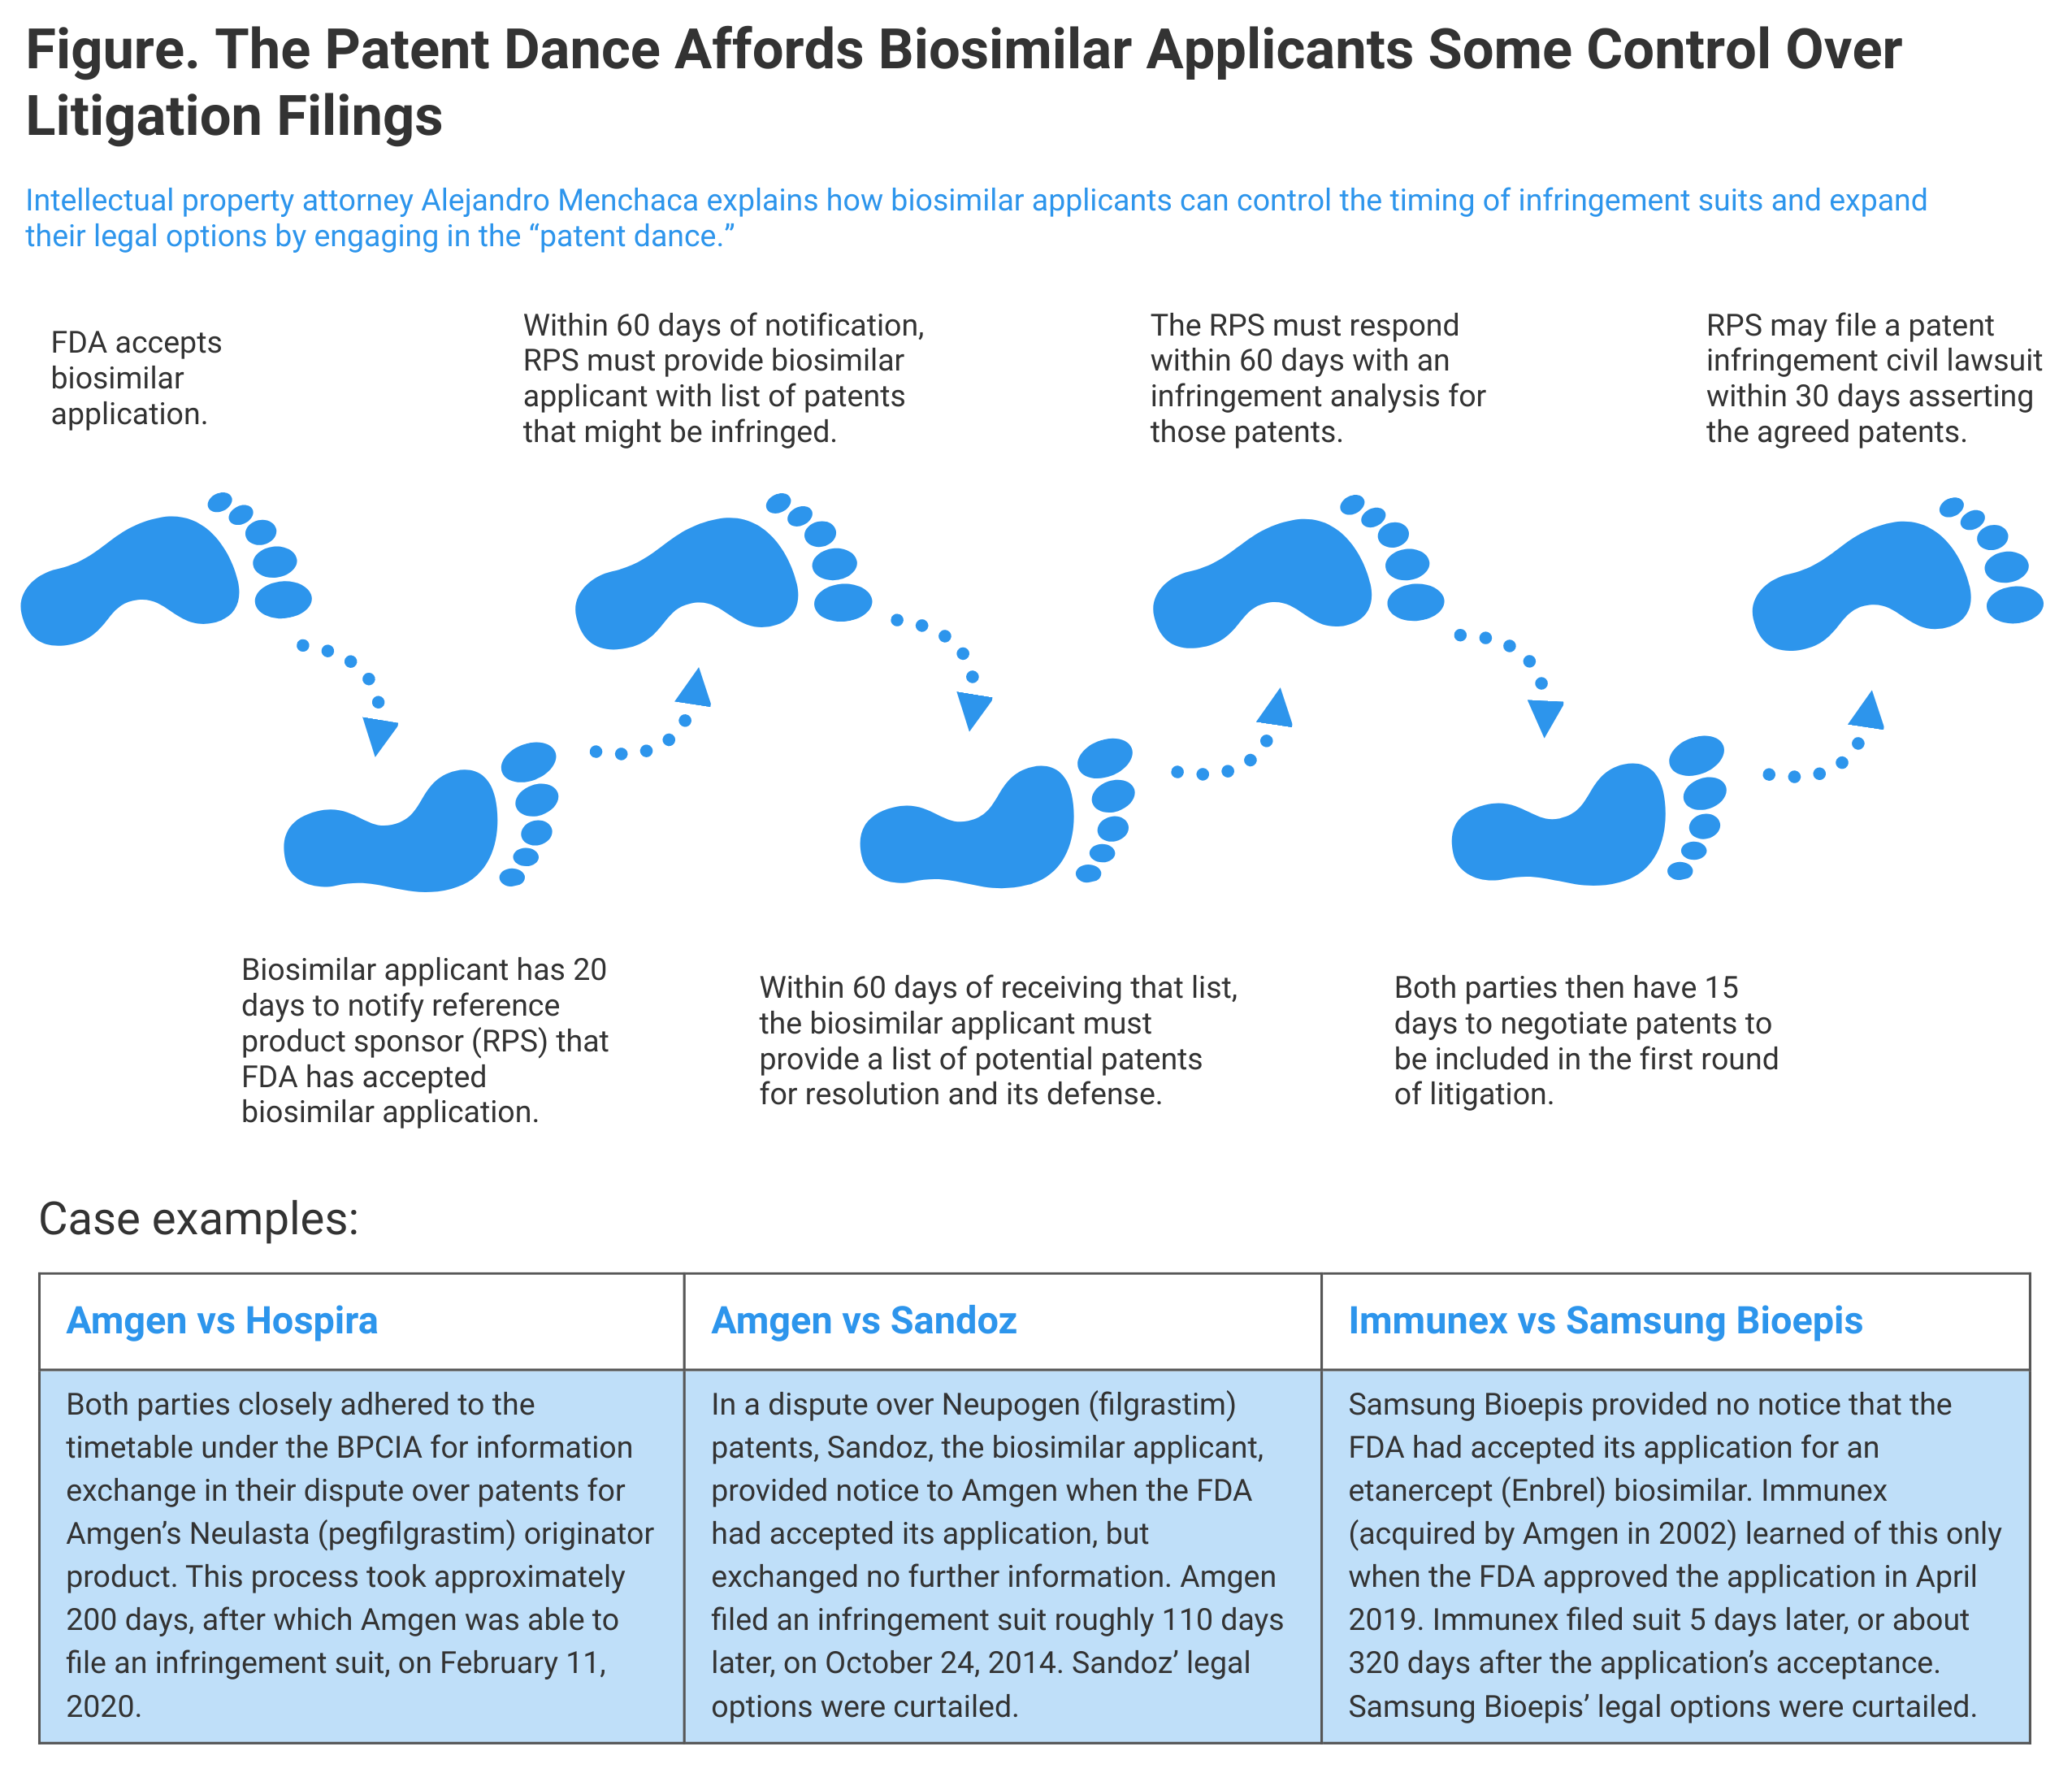 Figure. The Patent Dance Affords Biosimilar Applicants Some Control Over Litigation Filings